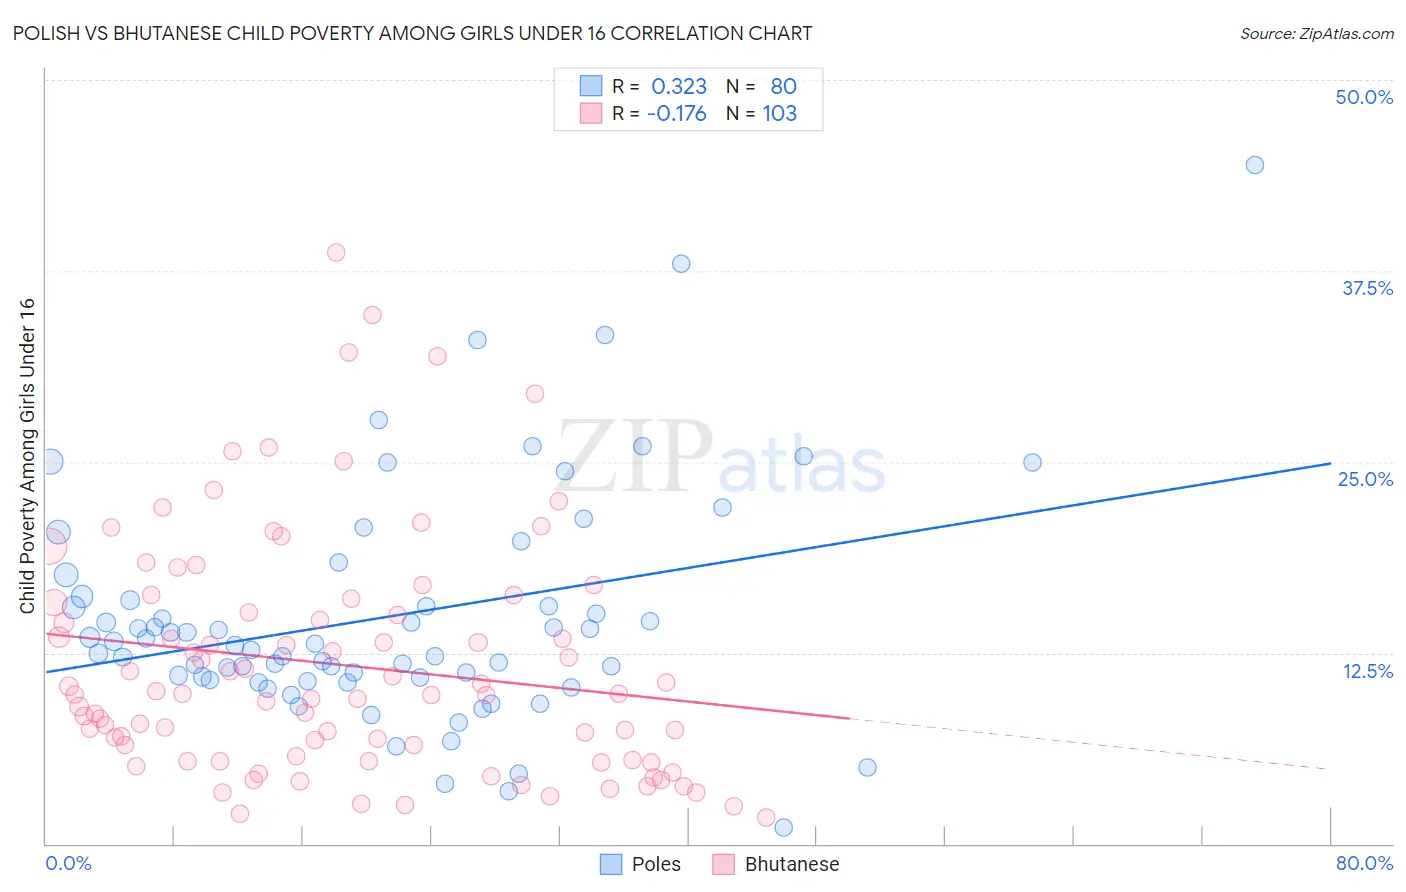 Polish vs Bhutanese Child Poverty Among Girls Under 16